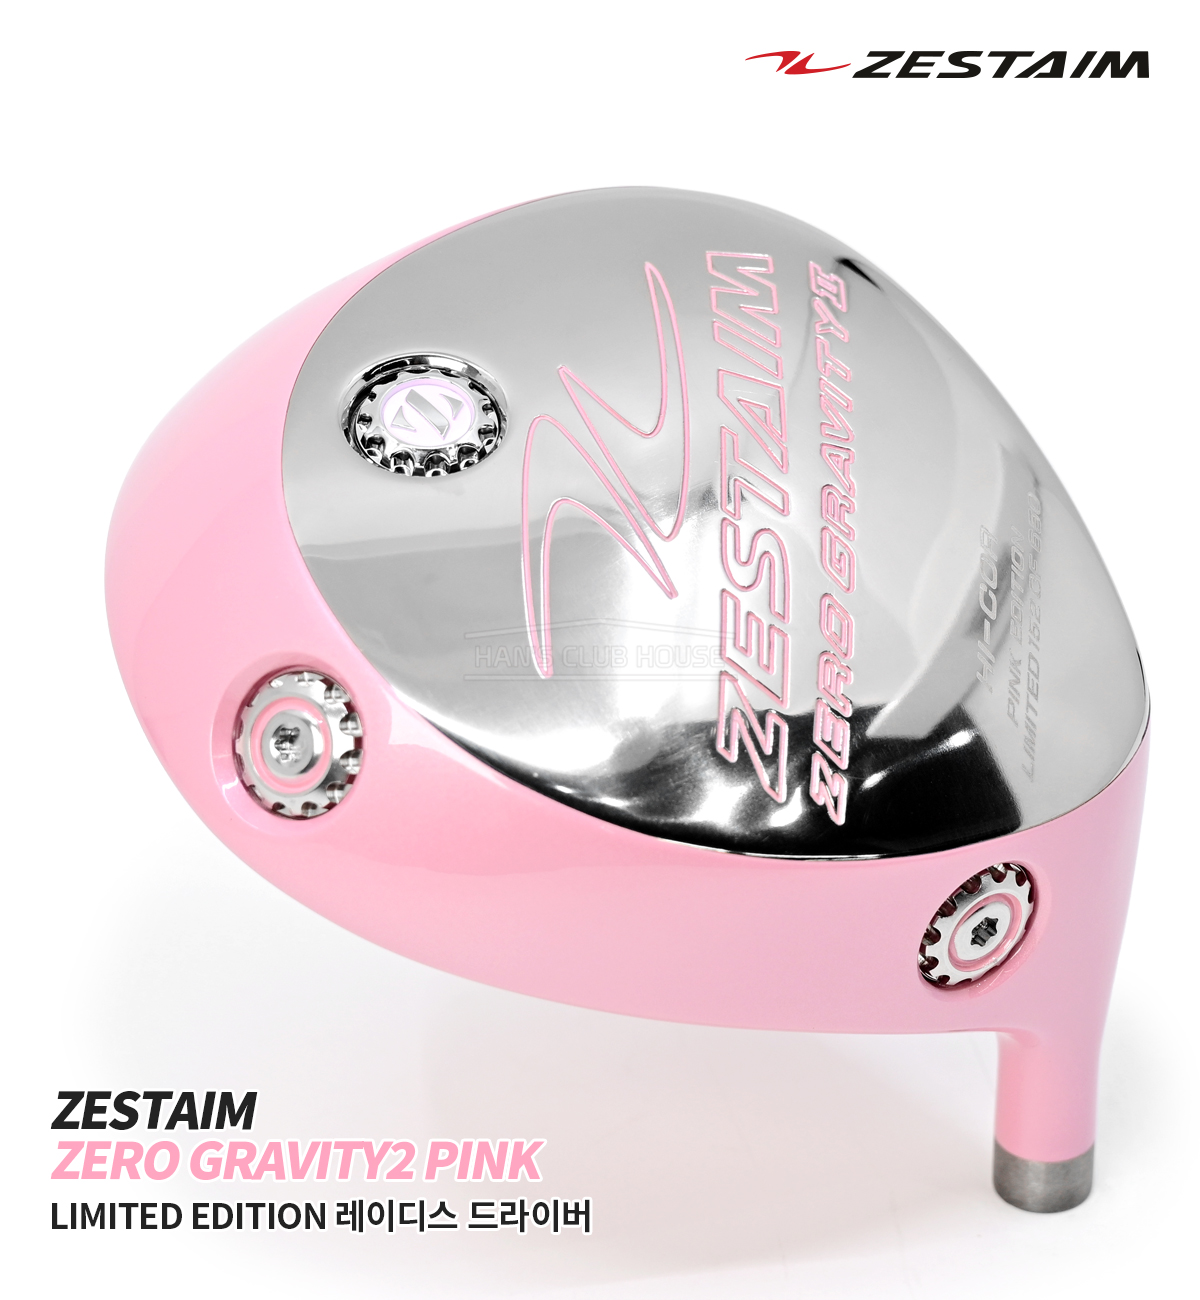 zestaim_zerogravity2_pink_show_01_113350.jpg